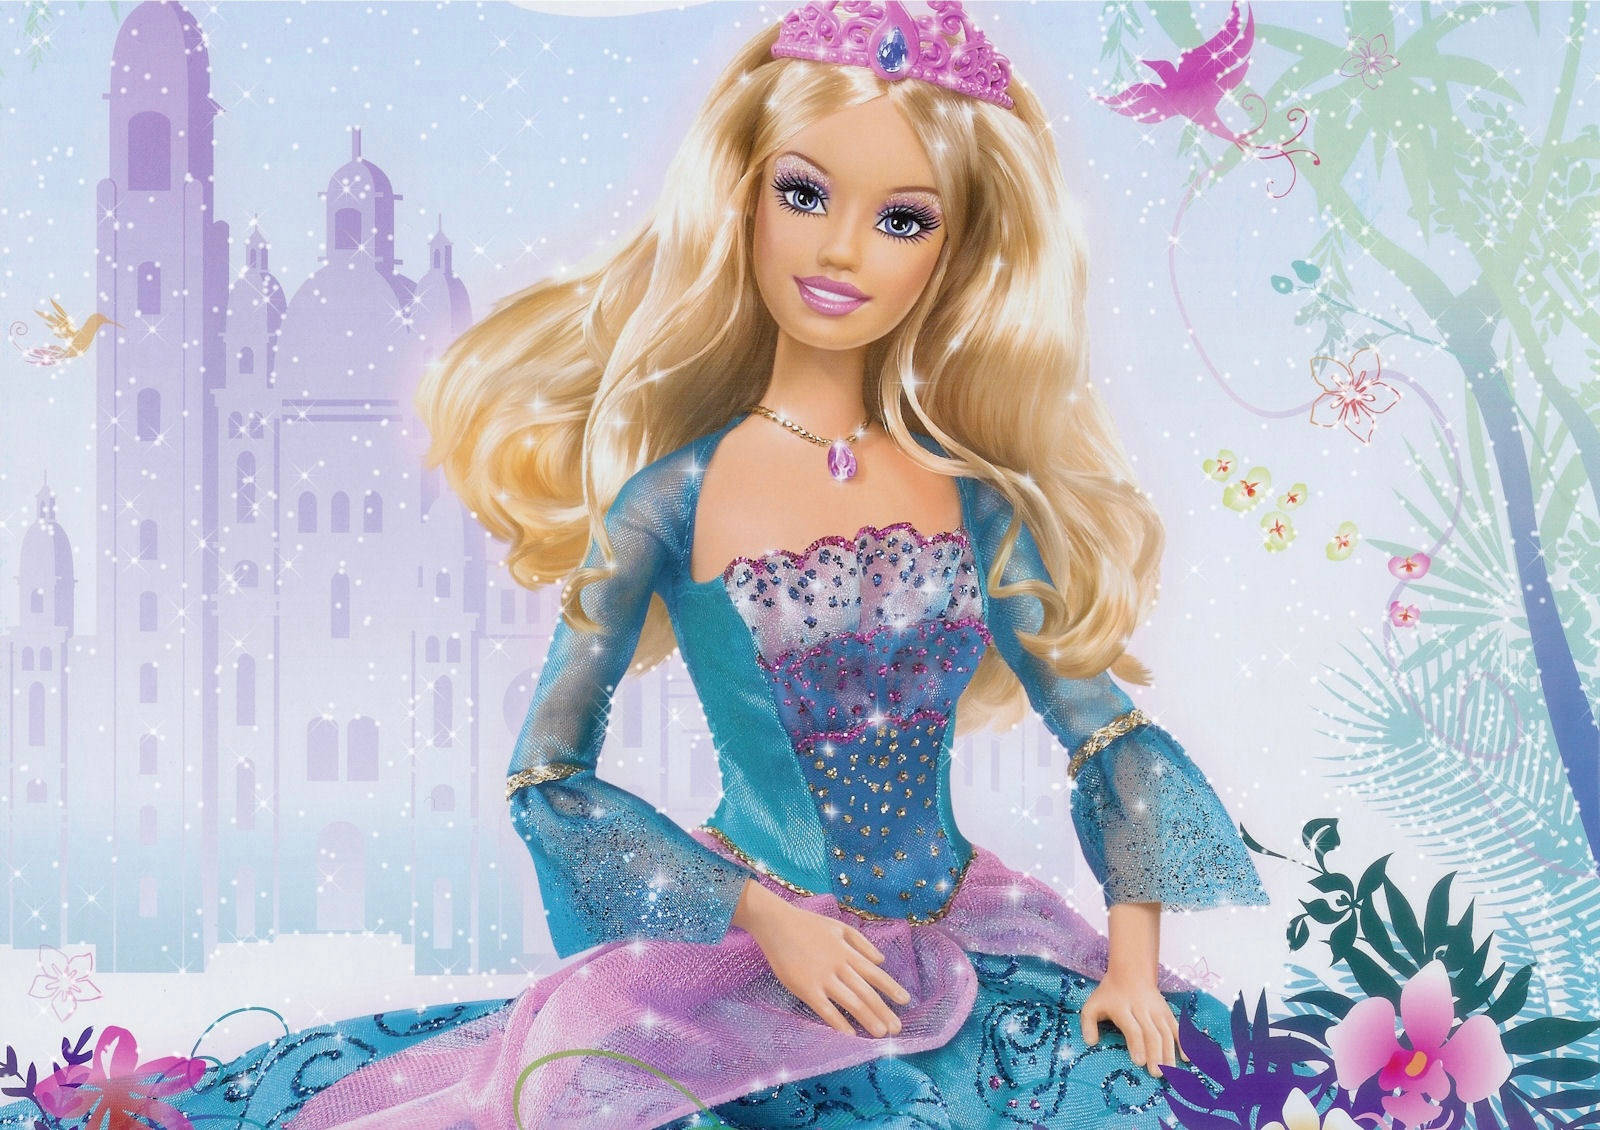 Top 999+ Beautiful Princess Wallpaper Full HD, 4K✅Free to Use